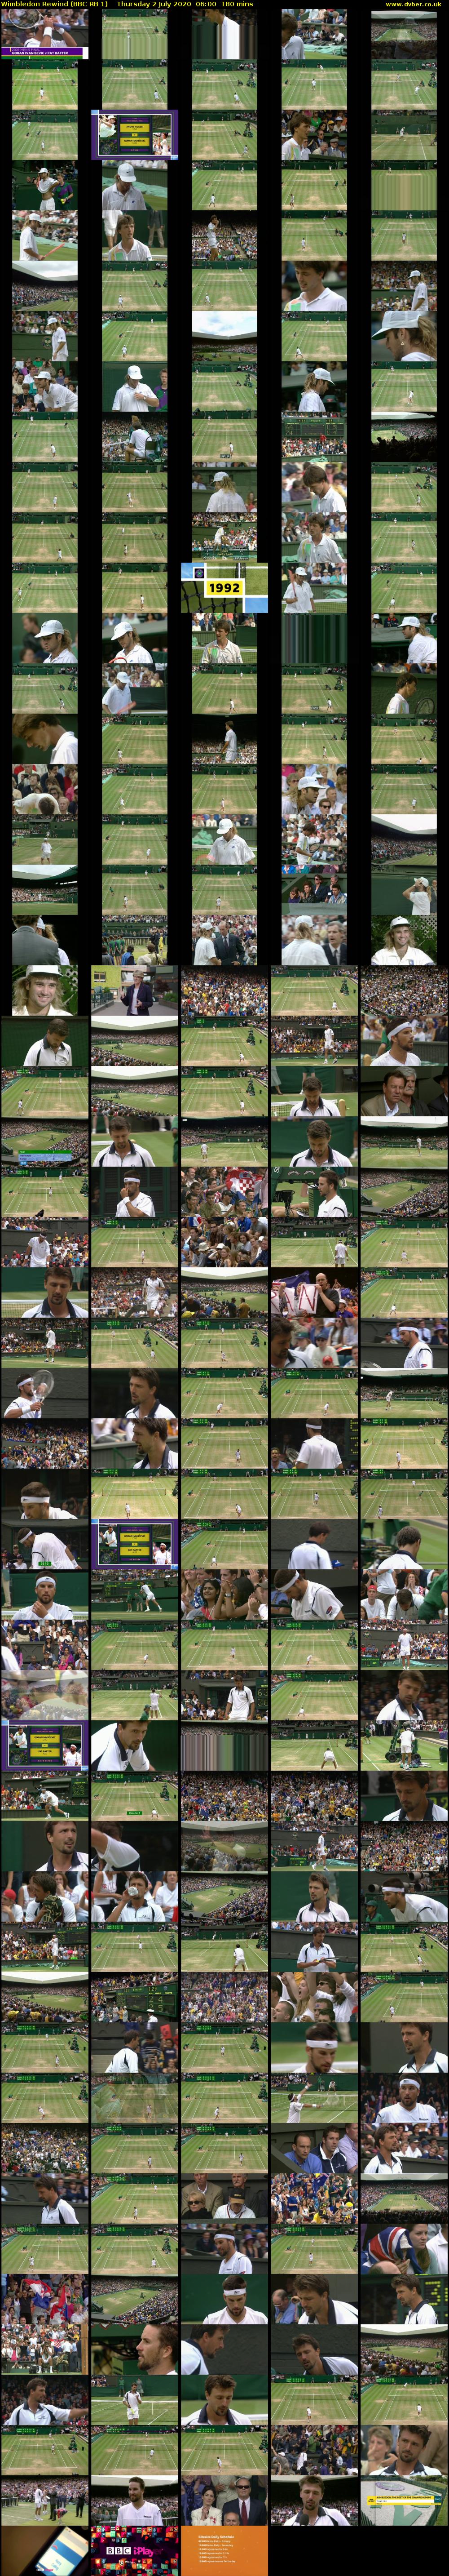 Wimbledon Rewind (BBC RB 1) Thursday 2 July 2020 06:00 - 09:00